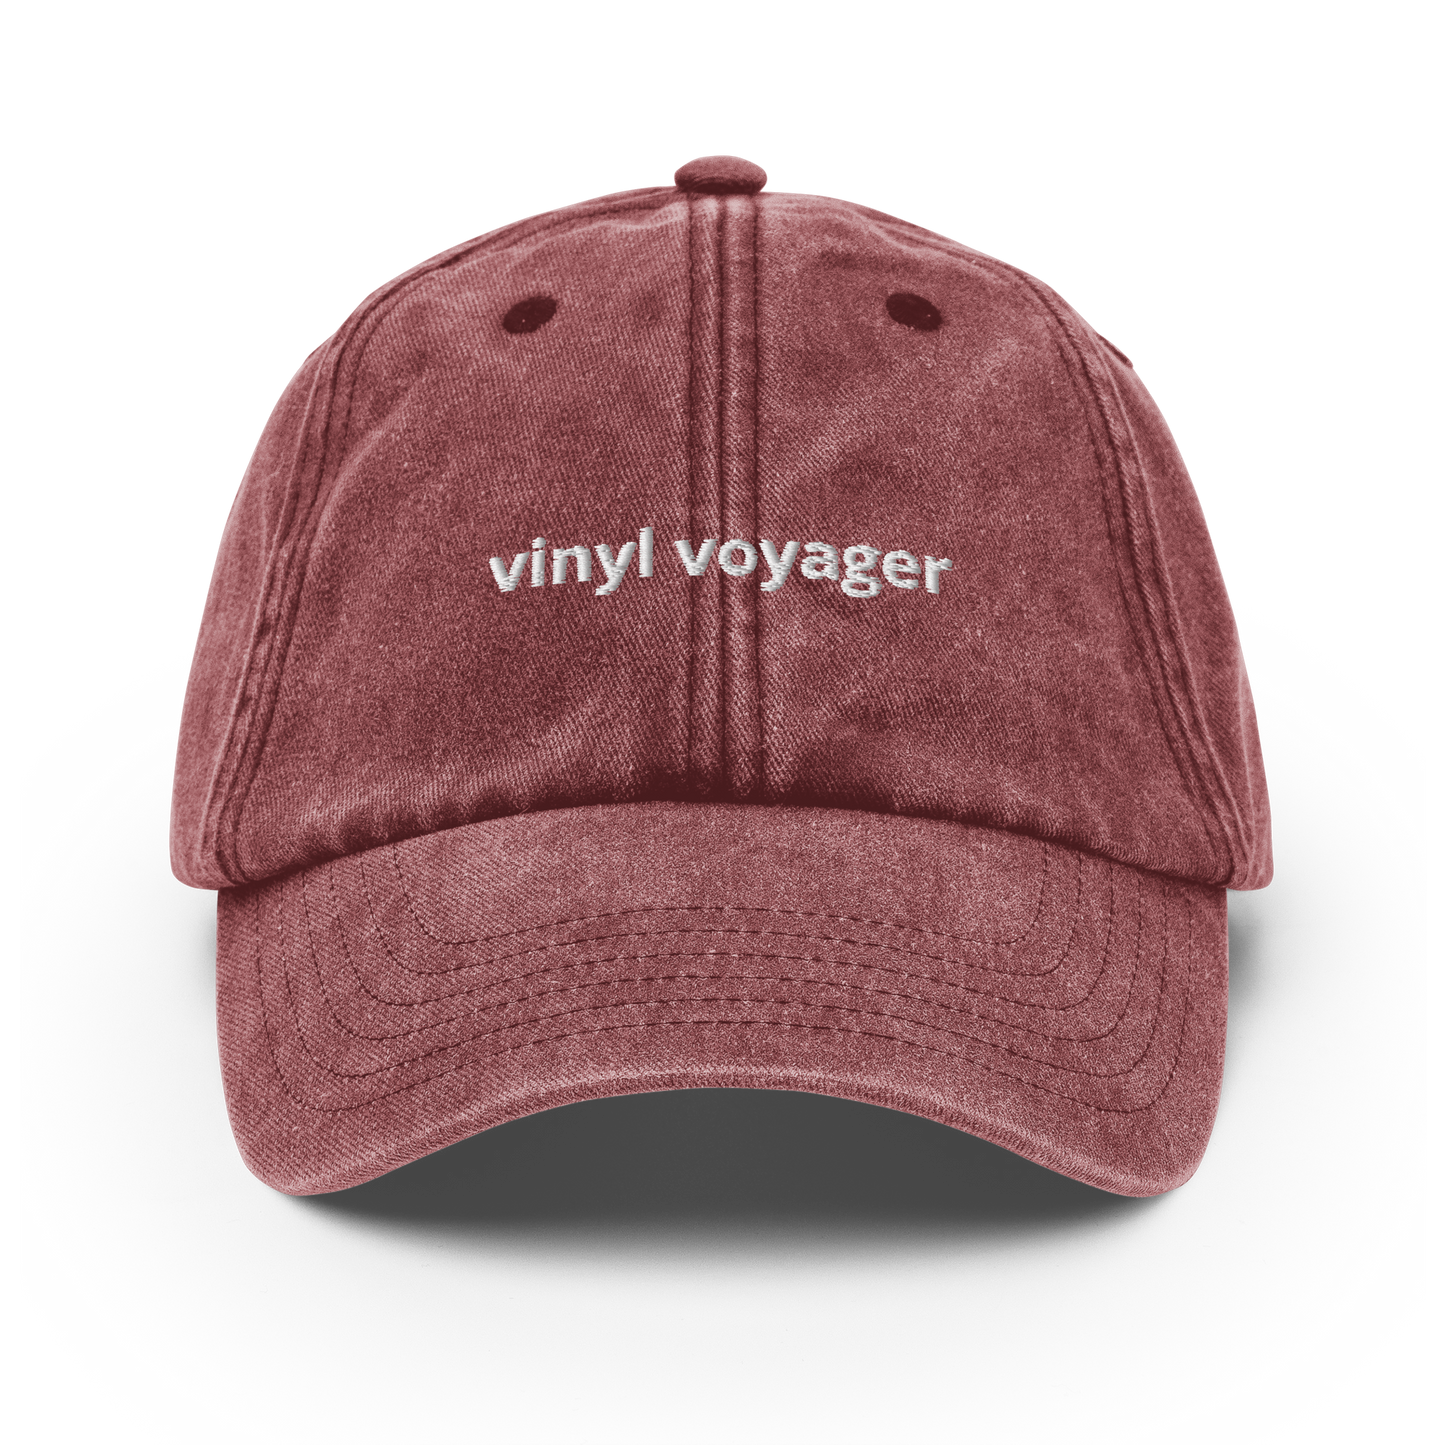 Vinyl Voyager - Vintage Hat